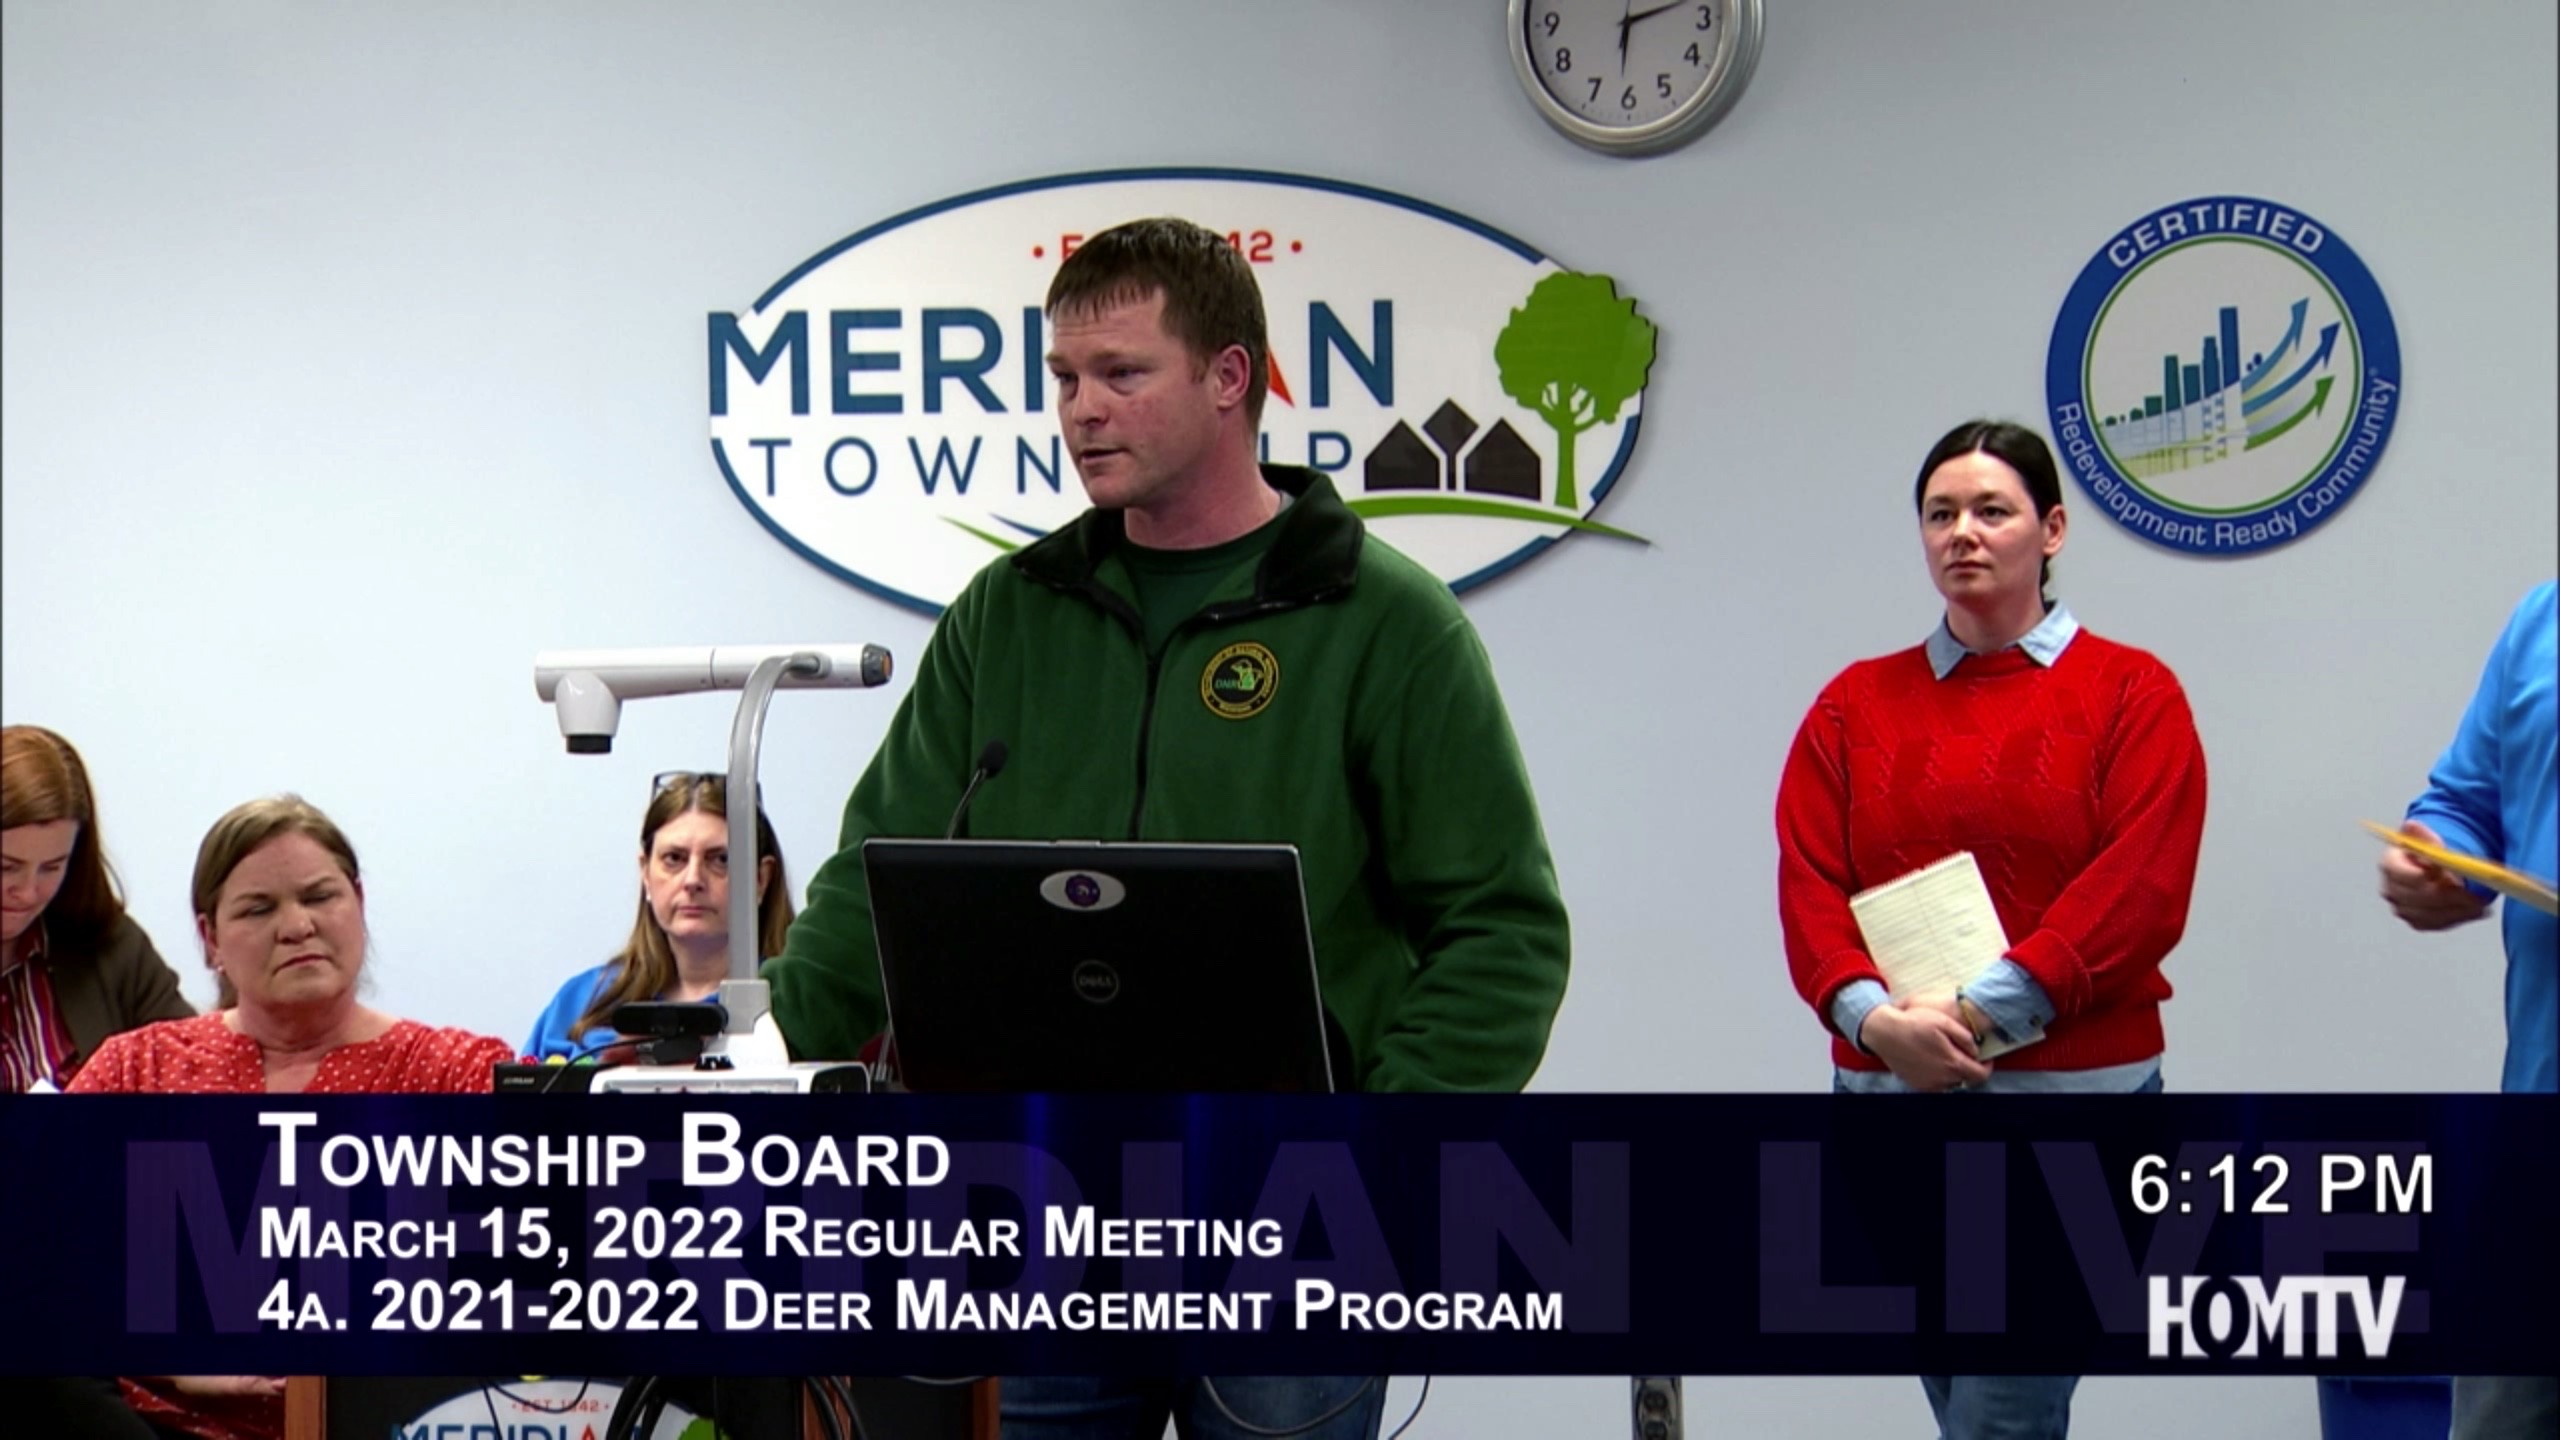 Meridian Township 2021-2022 Deer Management Program